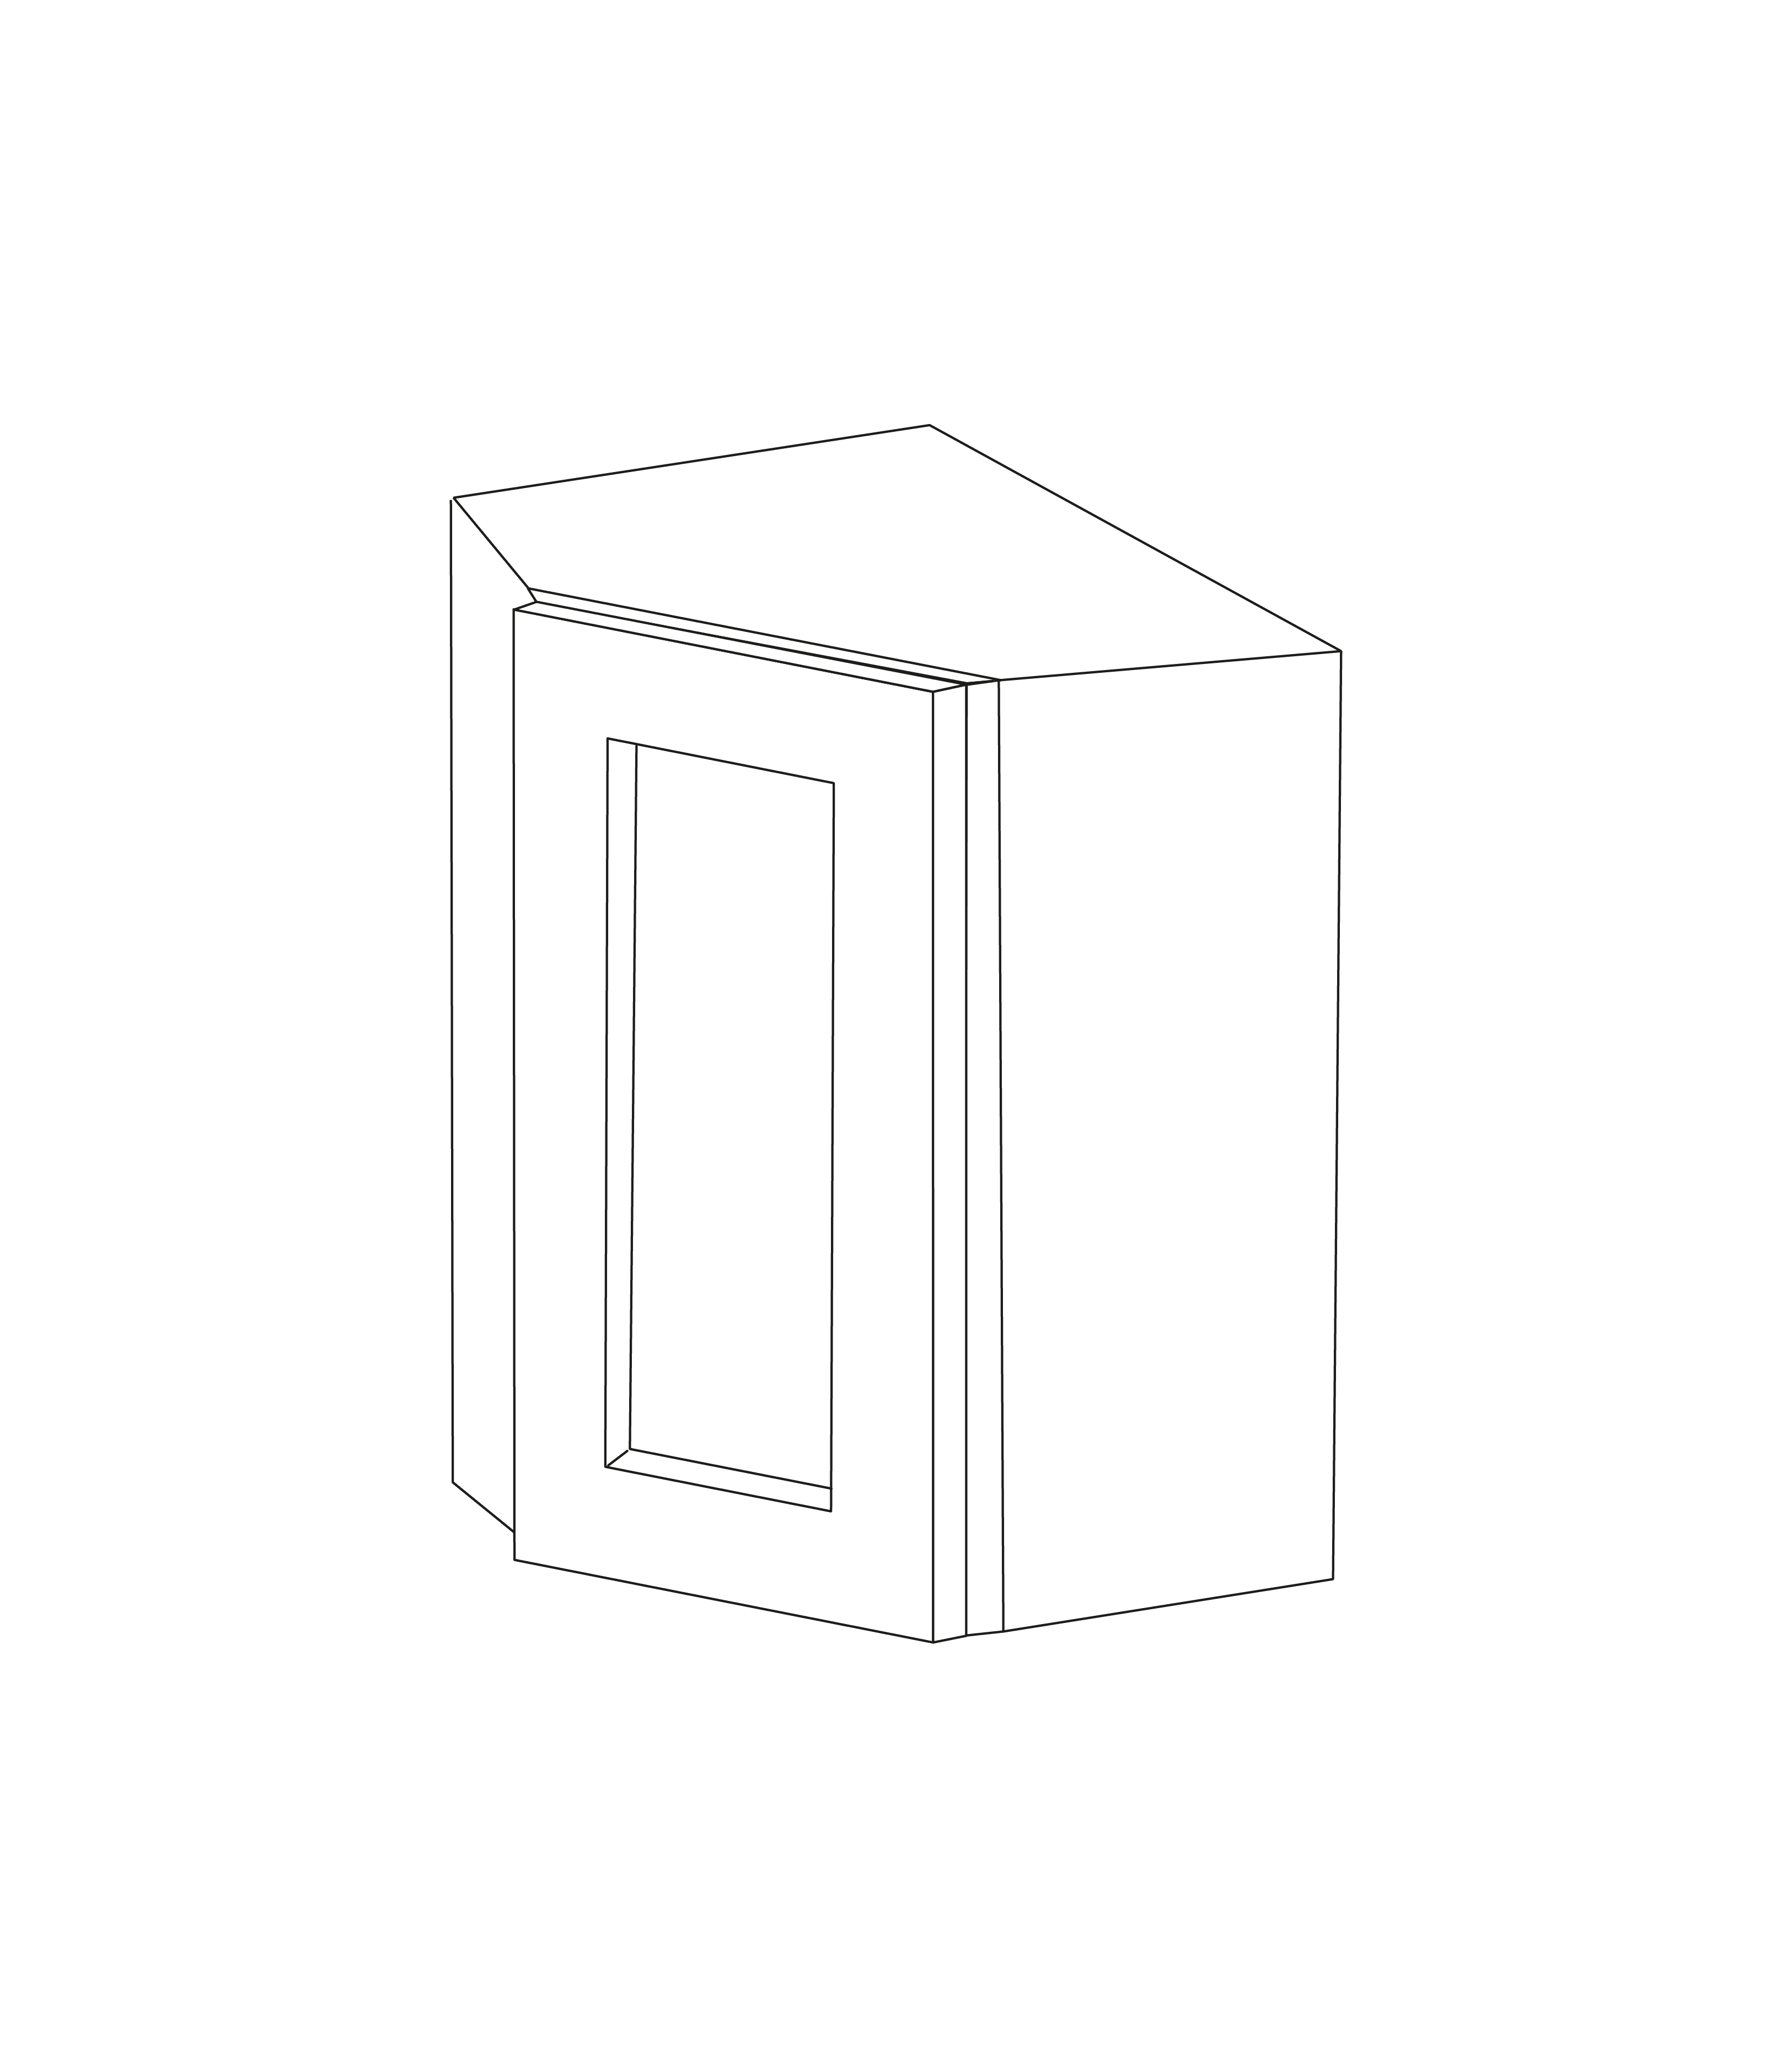 Malibu White Shaker 24x30 Diagonal Corner Wall Cabinet - Assembled